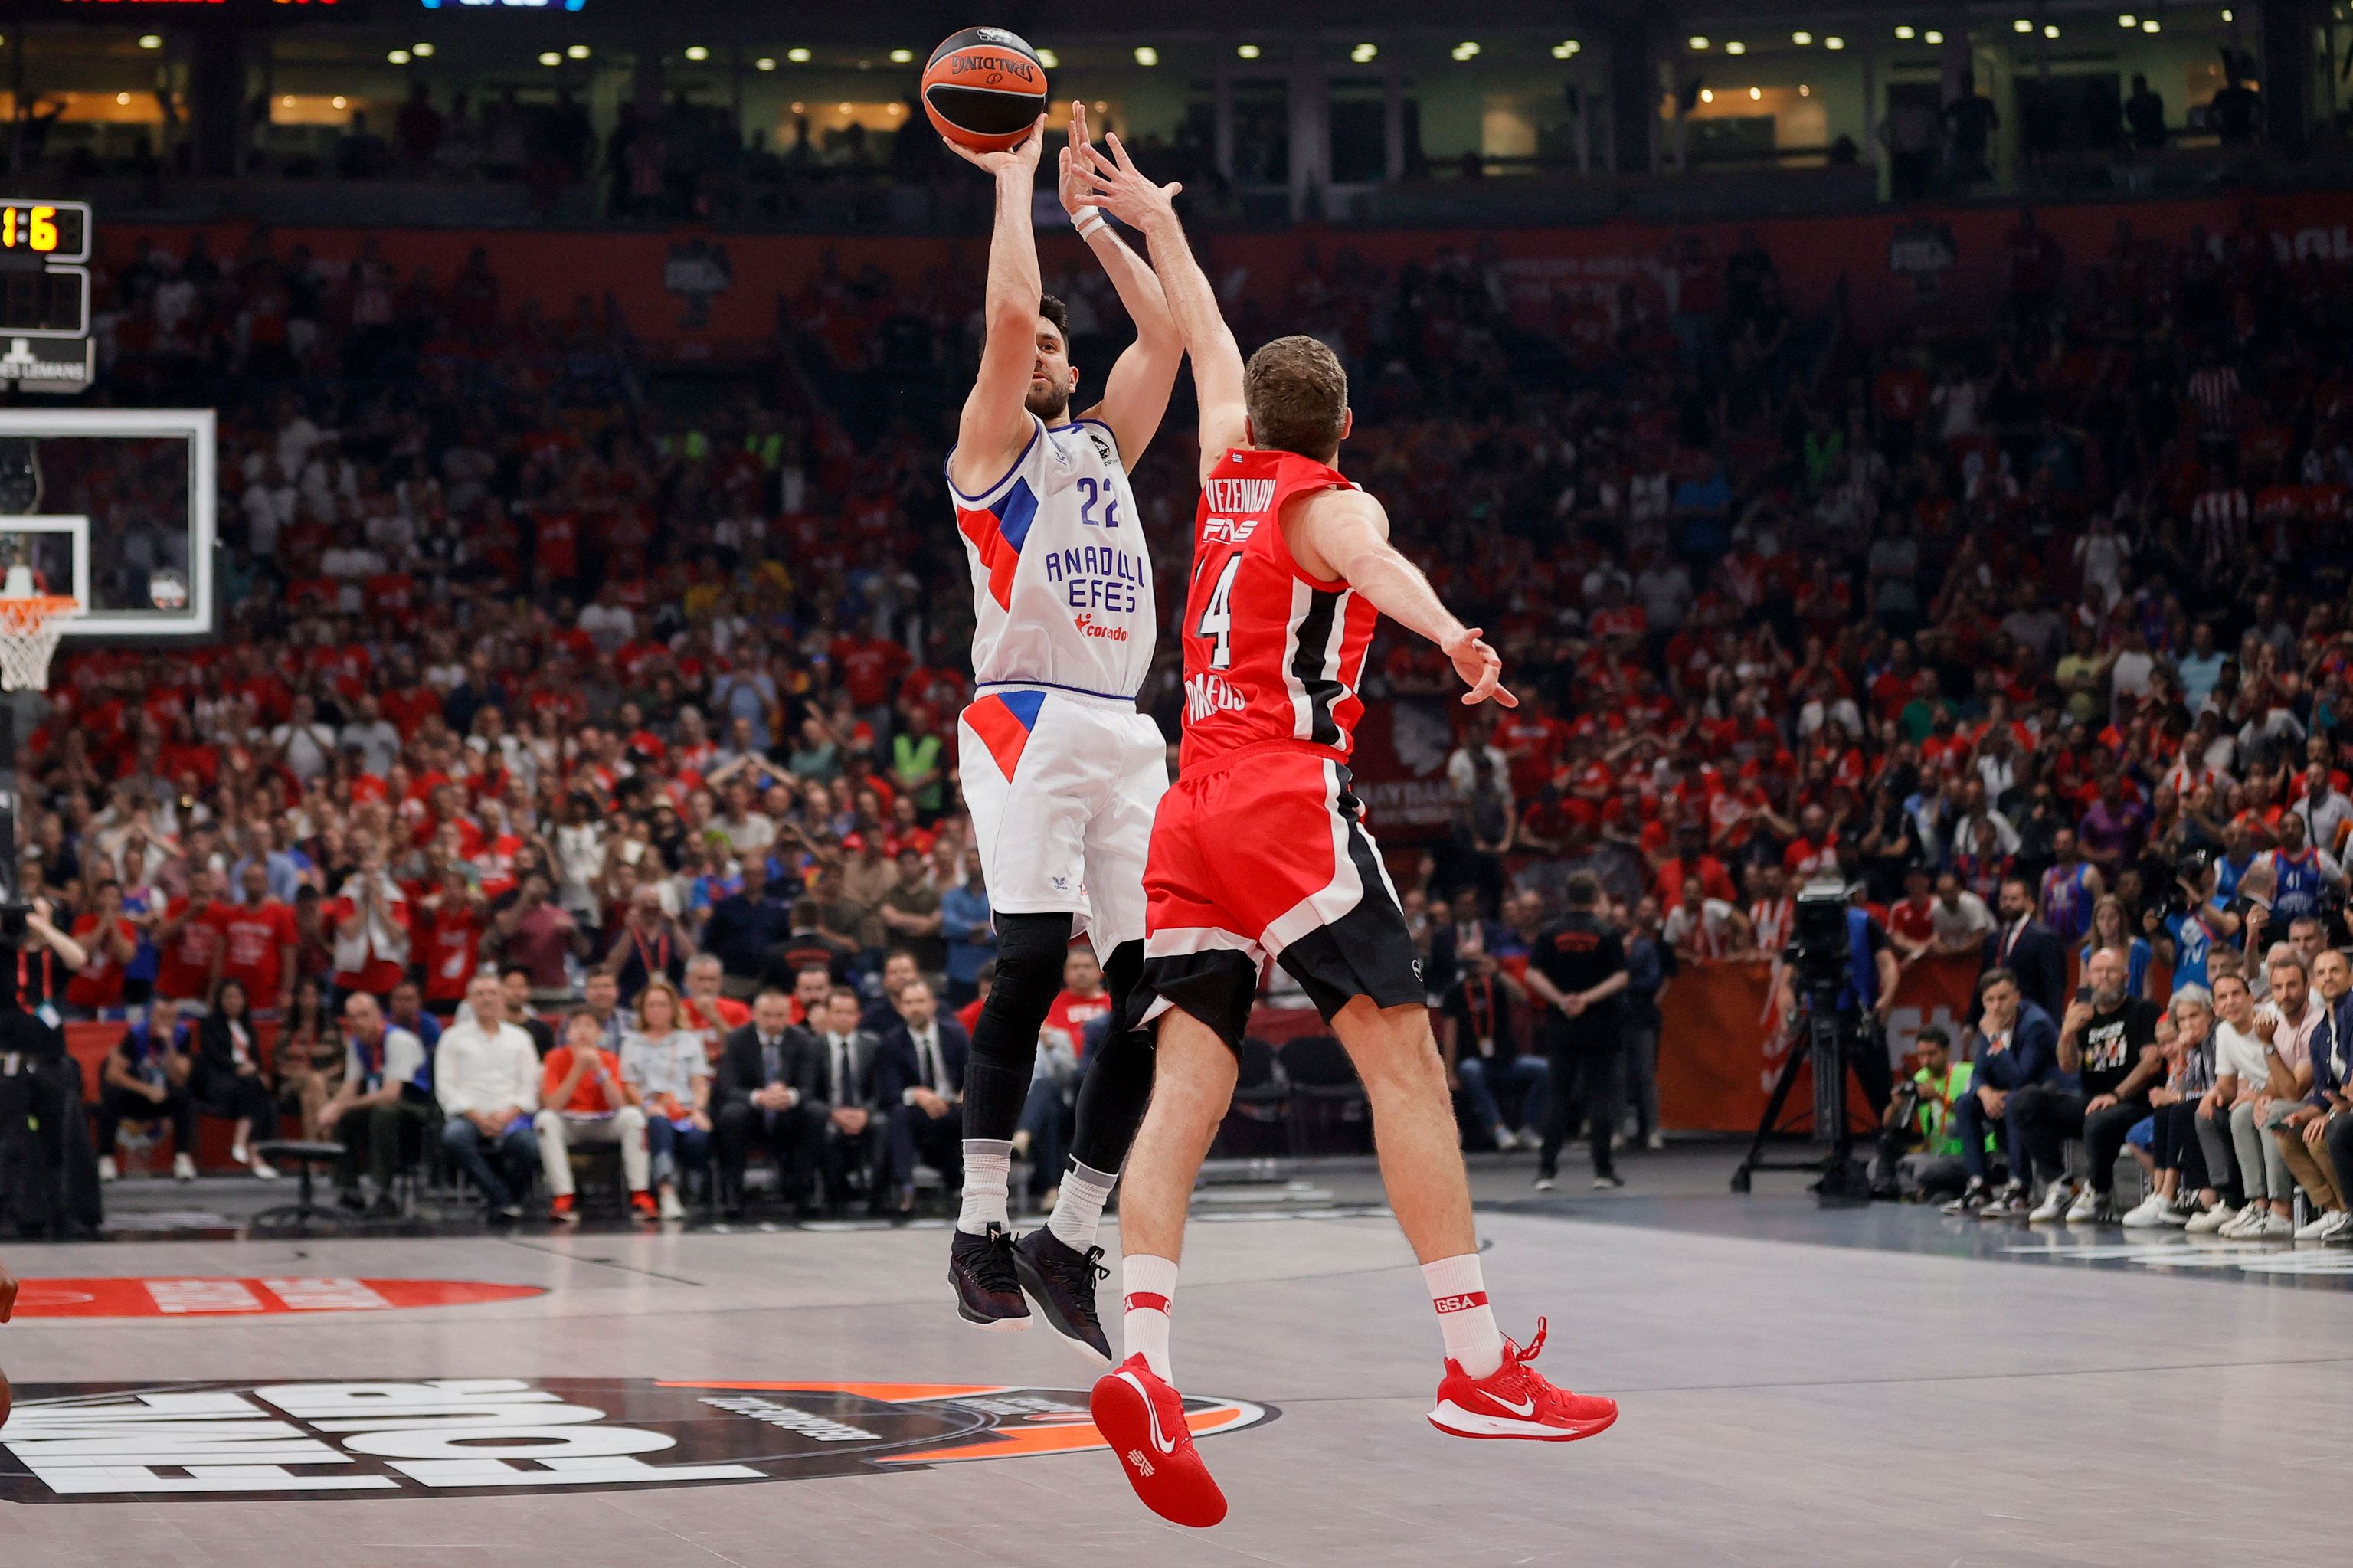 Micic climbs on Vegenkov, in the final basket.